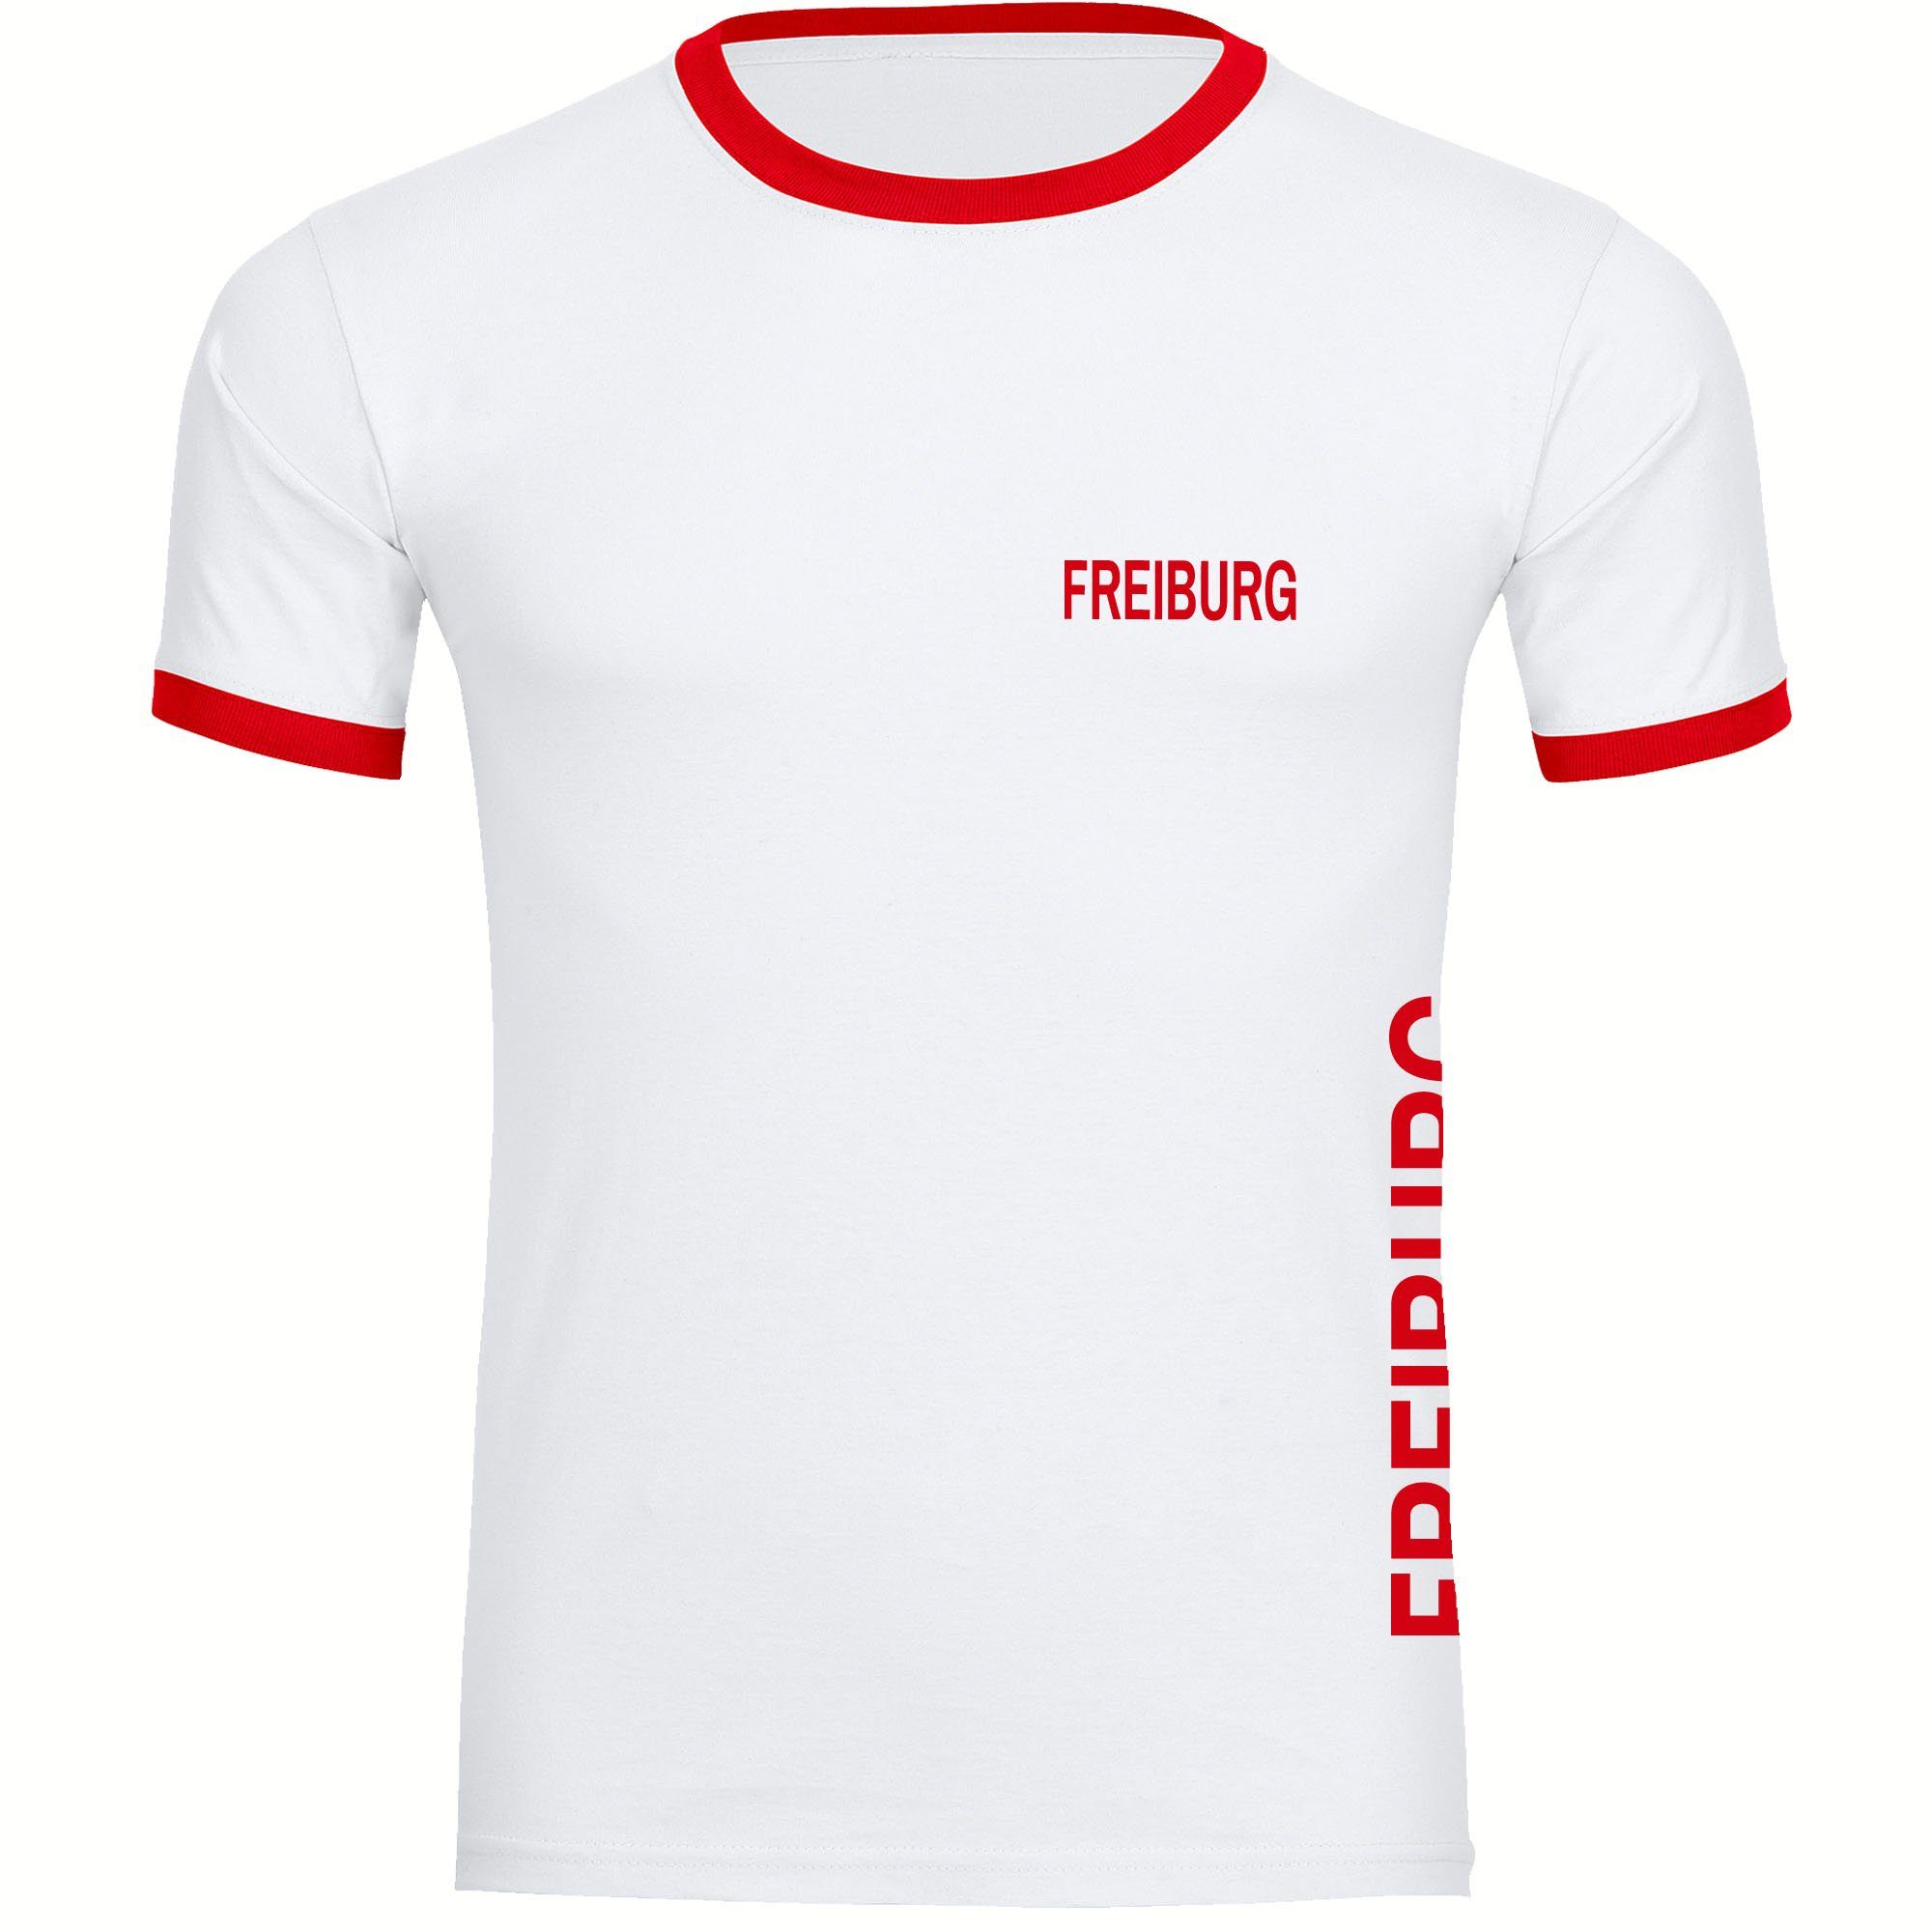 multifanshop T-Shirt Kontrast Freiburg - Brust & Seite - Männer